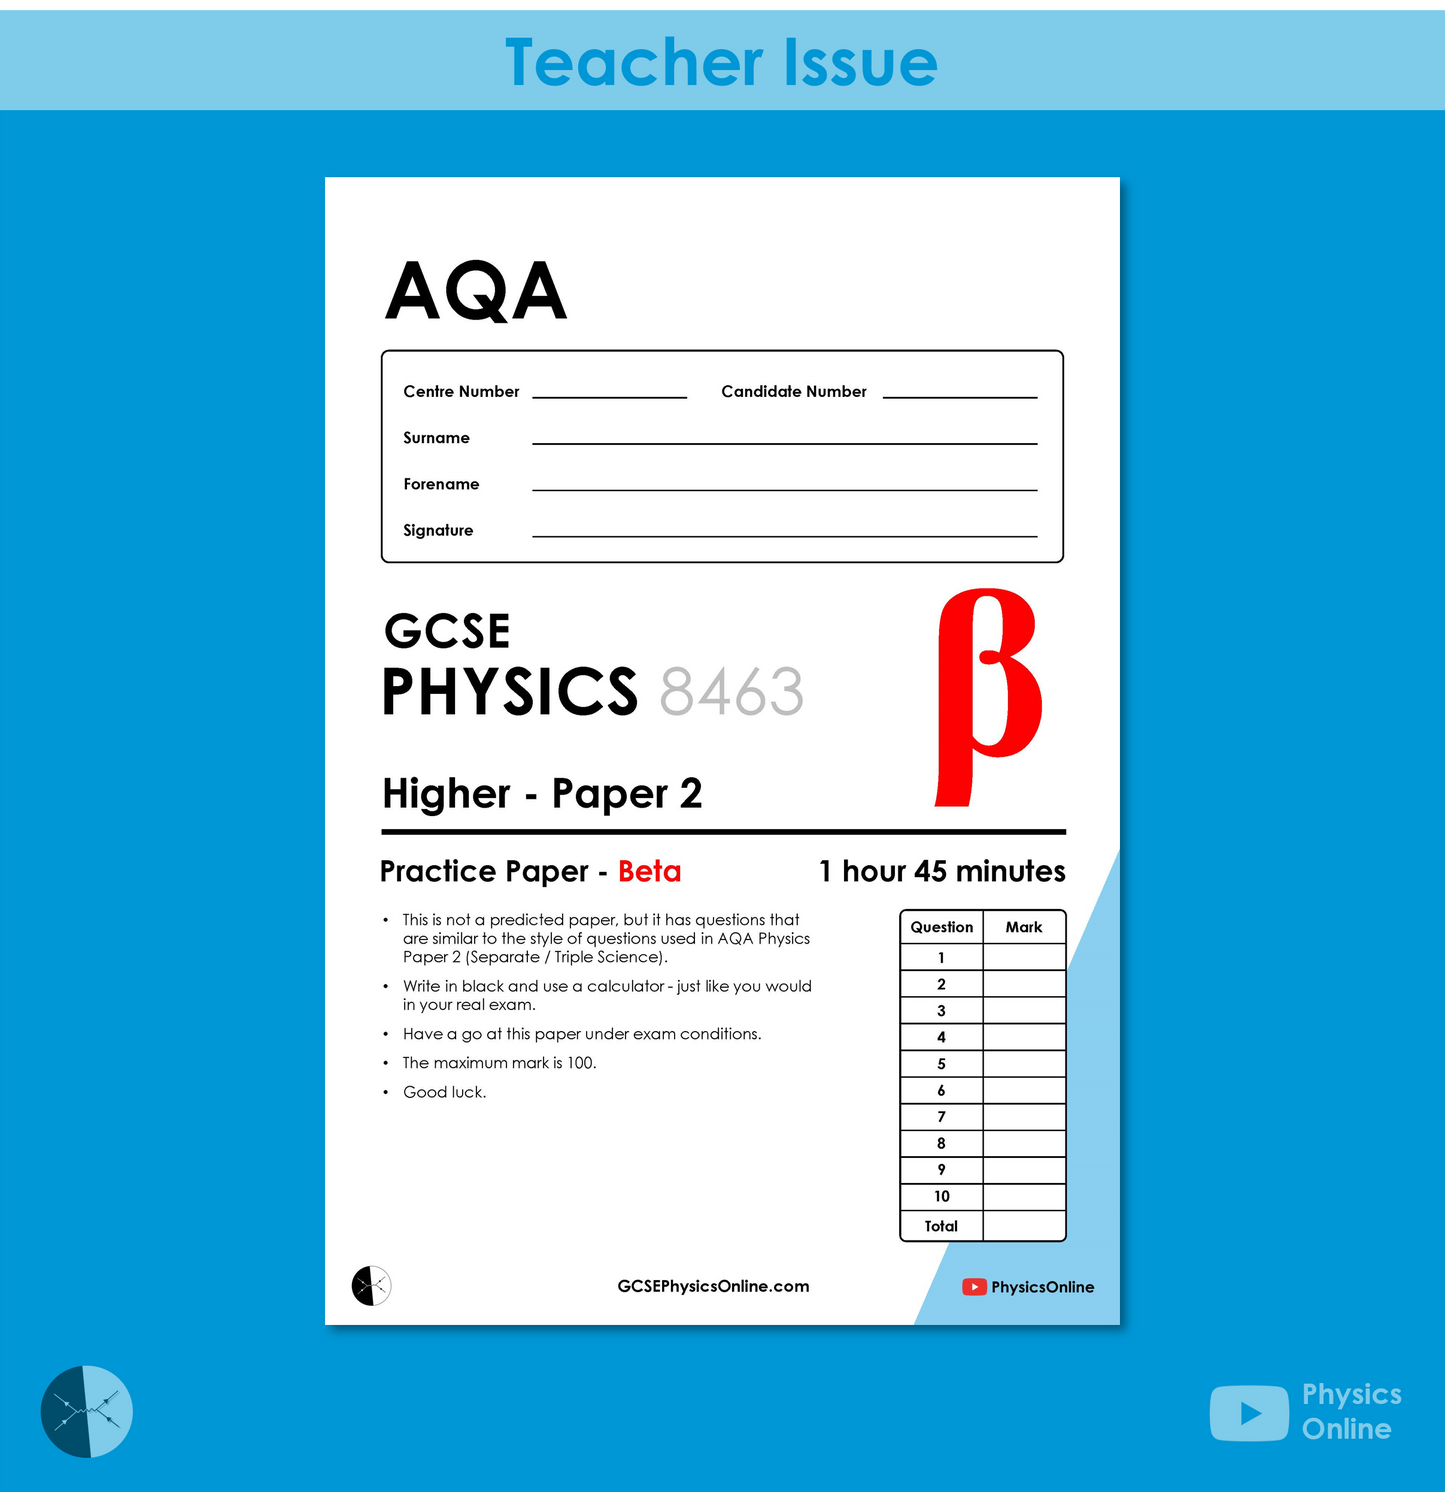 AQA Practice Paper | Paper 2 - Beta | Teacher Issue | GCSE Physics